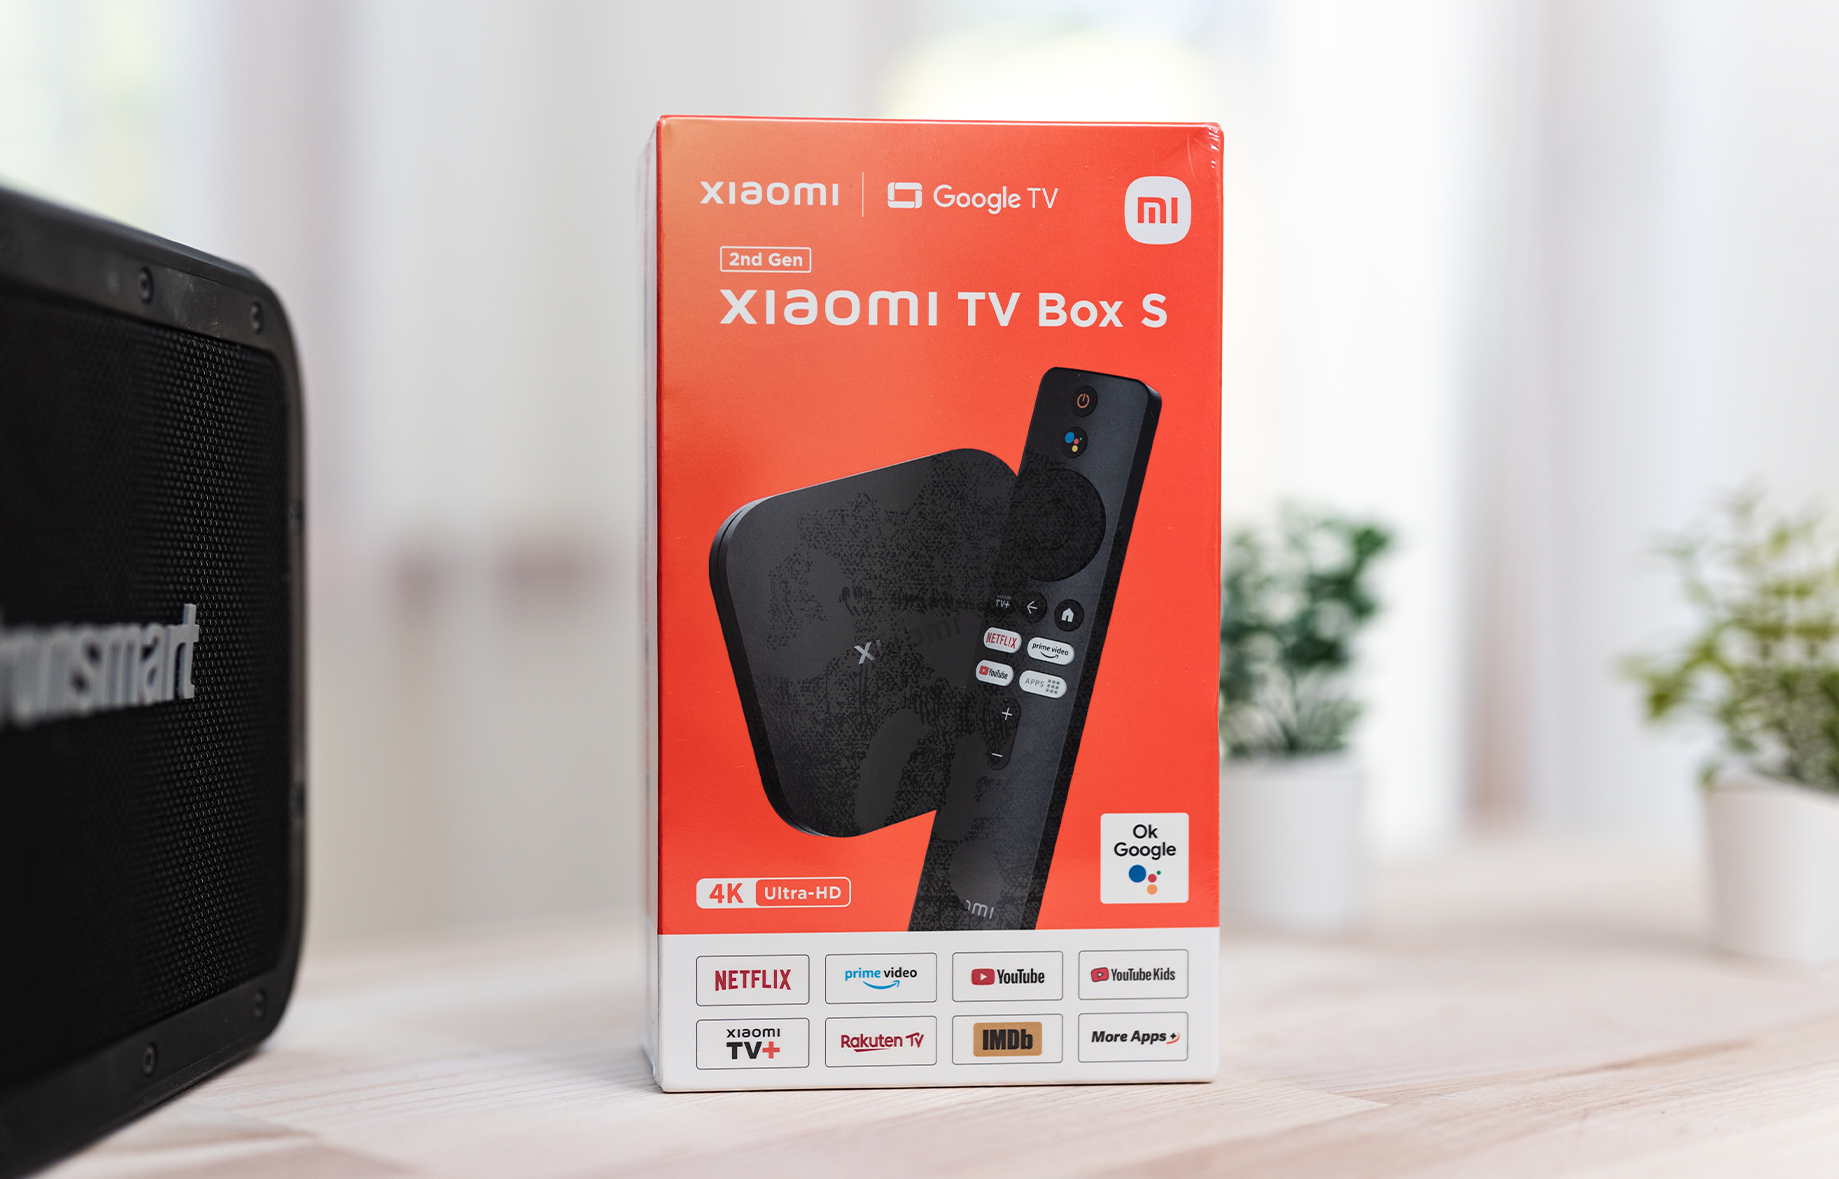 Xiaomi Mi Box S 2nd Gen Unboxing & Review - Better than Chromecast? 